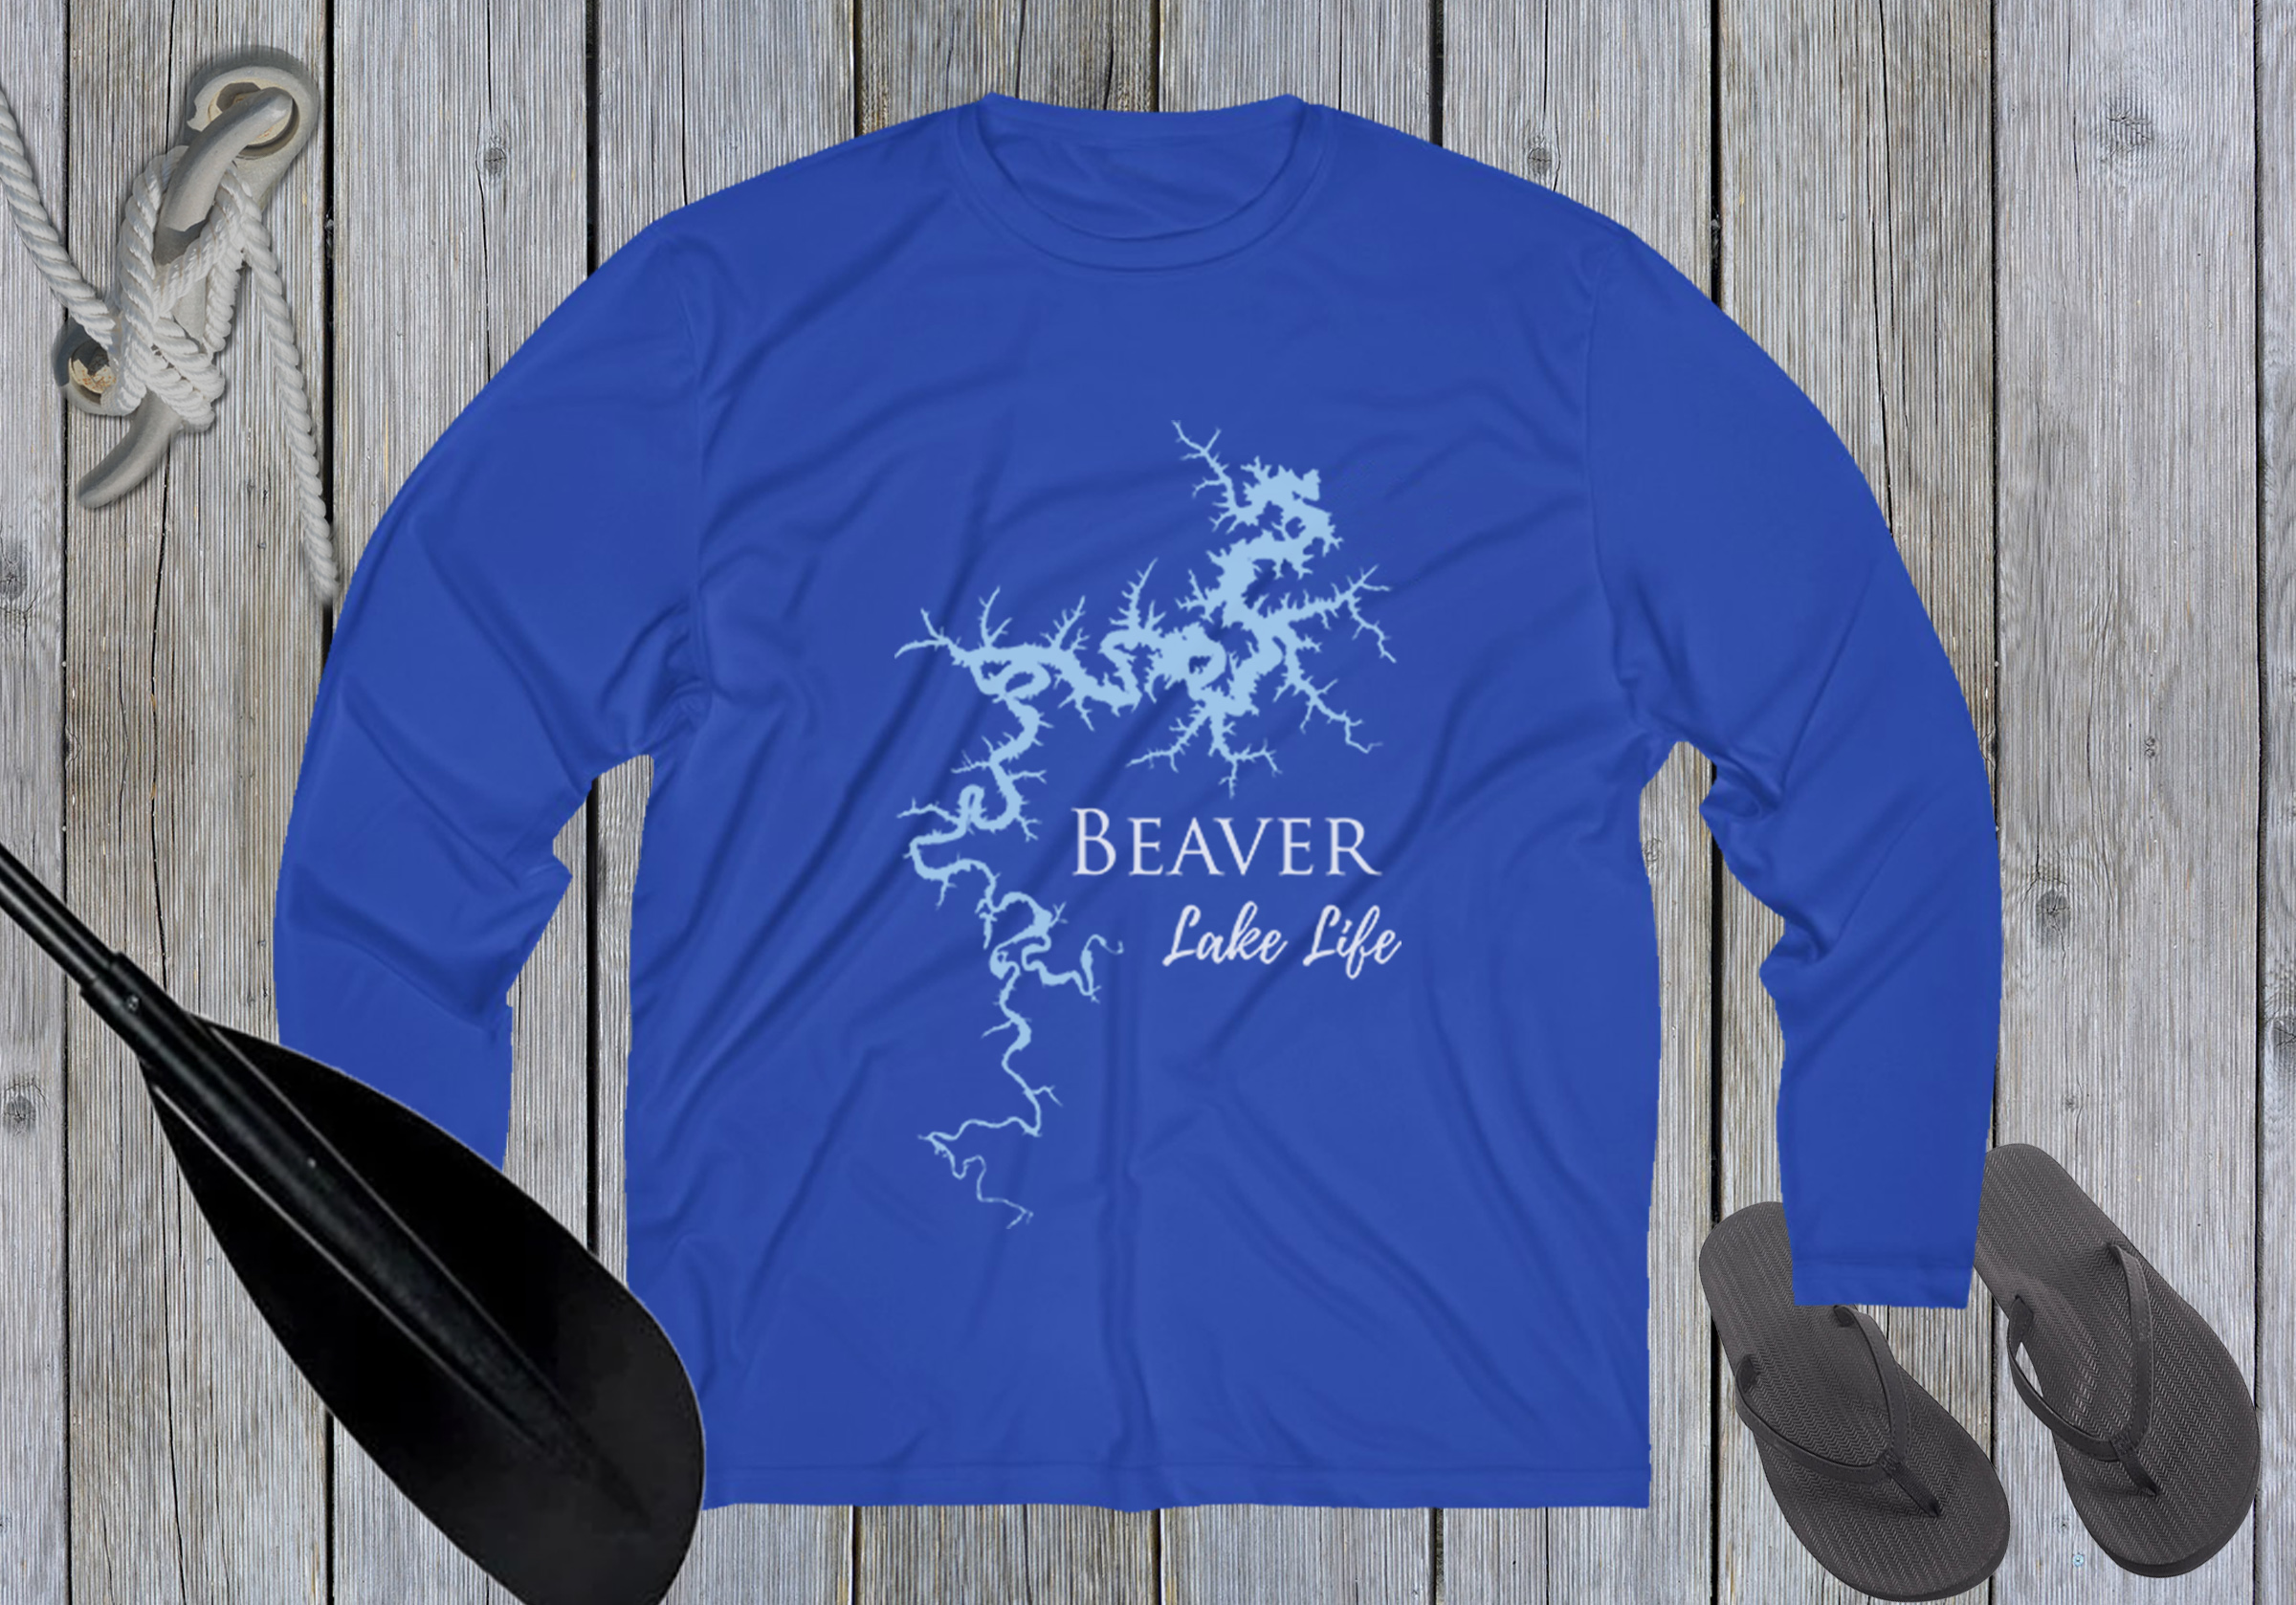 Beaver Lake Life Dri-fit Boating Shirt - Breathable Material- Men's Long Sleeve Moisture Wicking Tee - Arkansas Lake